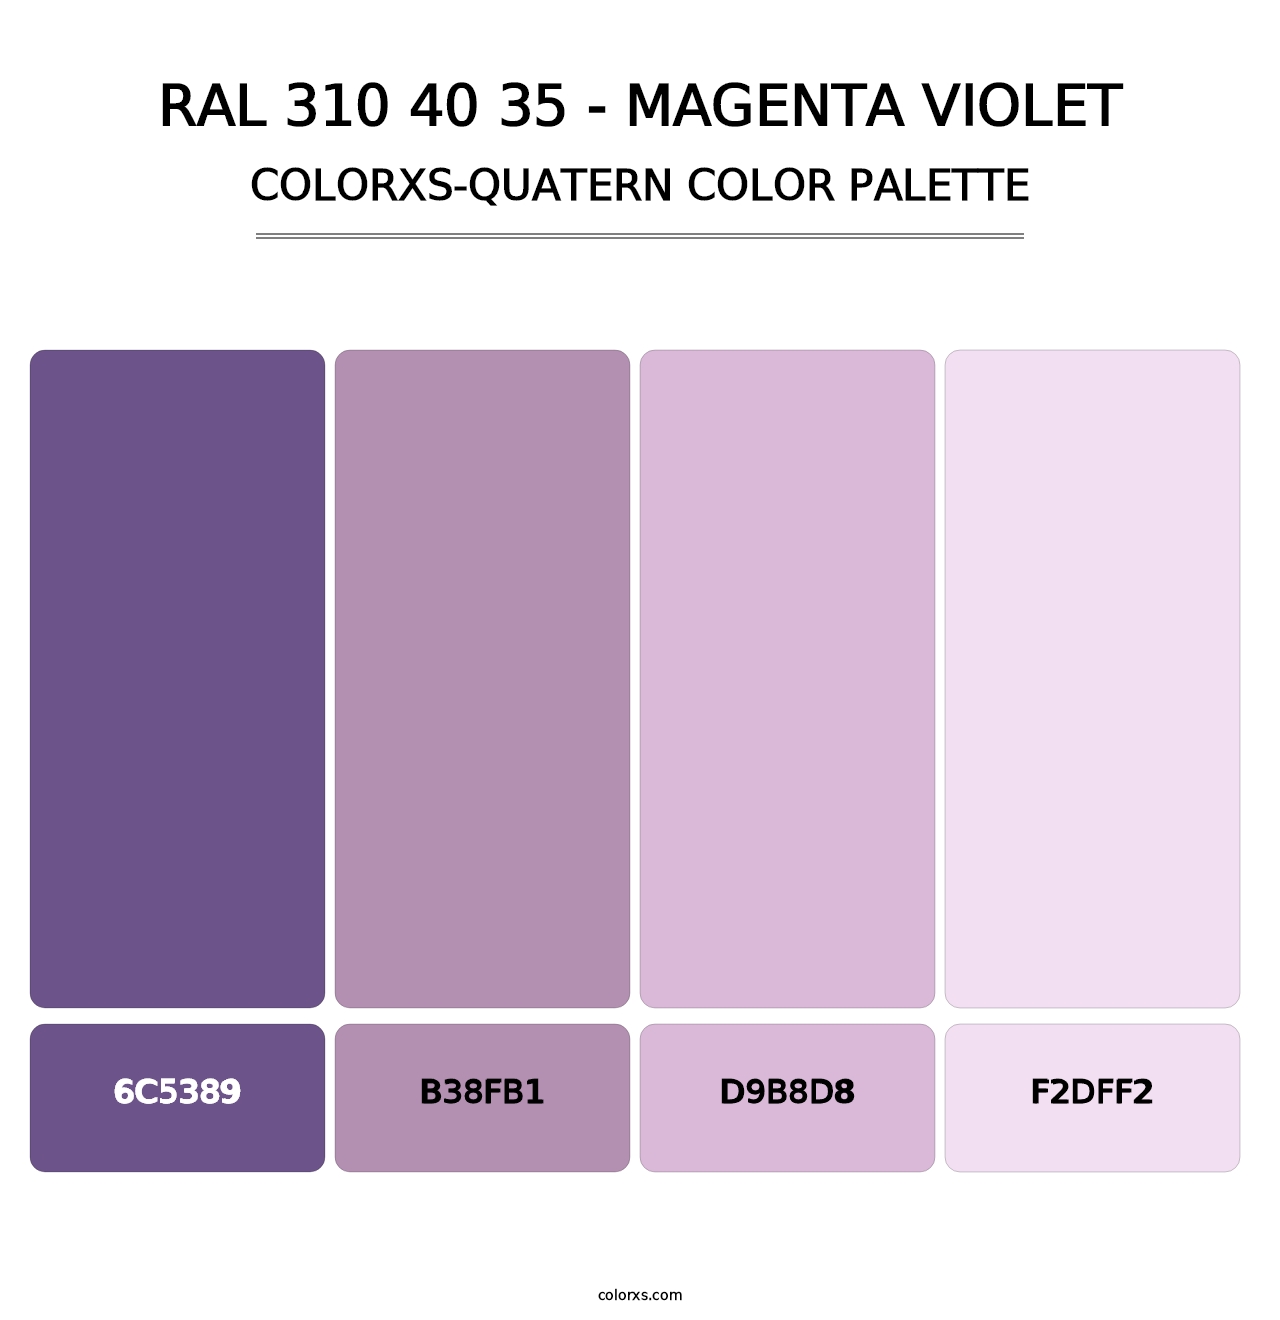 RAL 310 40 35 - Magenta Violet - Colorxs Quatern Palette